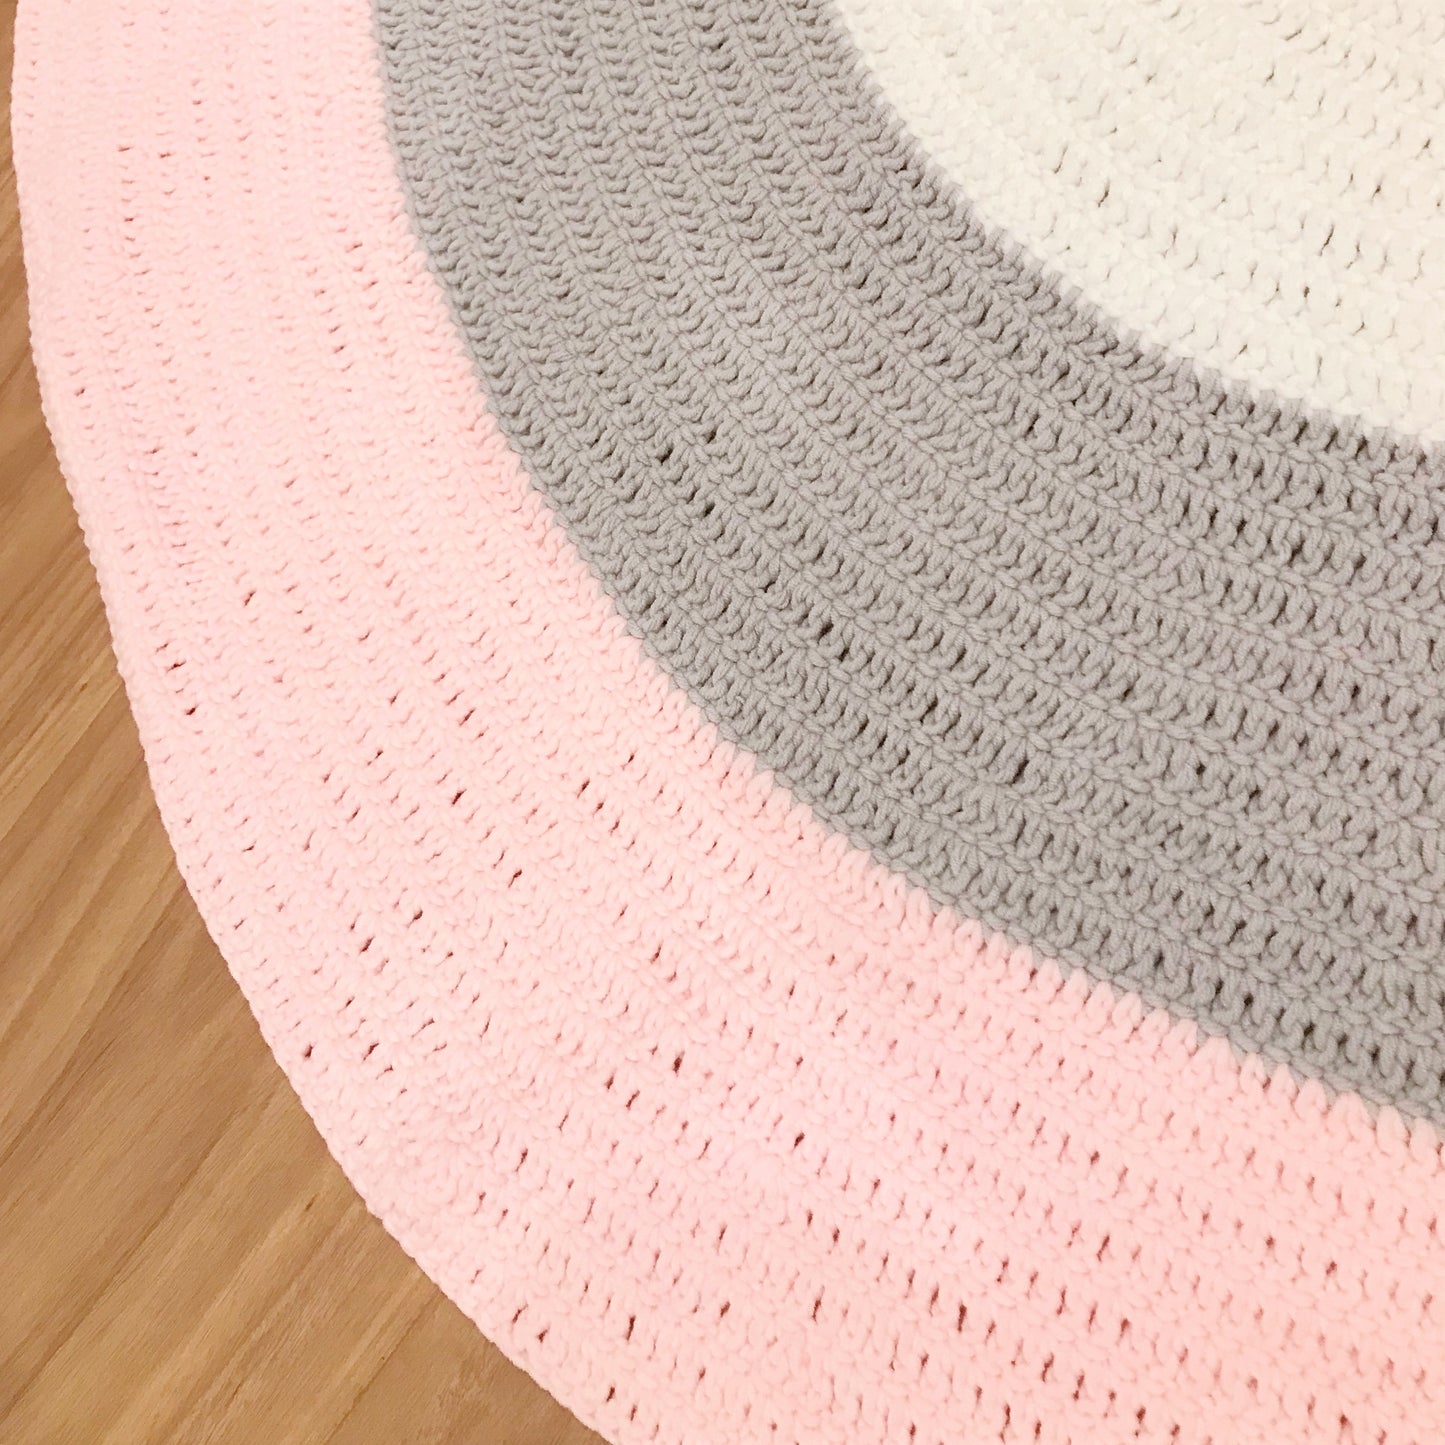 Crochet Rug - Blush Pink, Grey + White